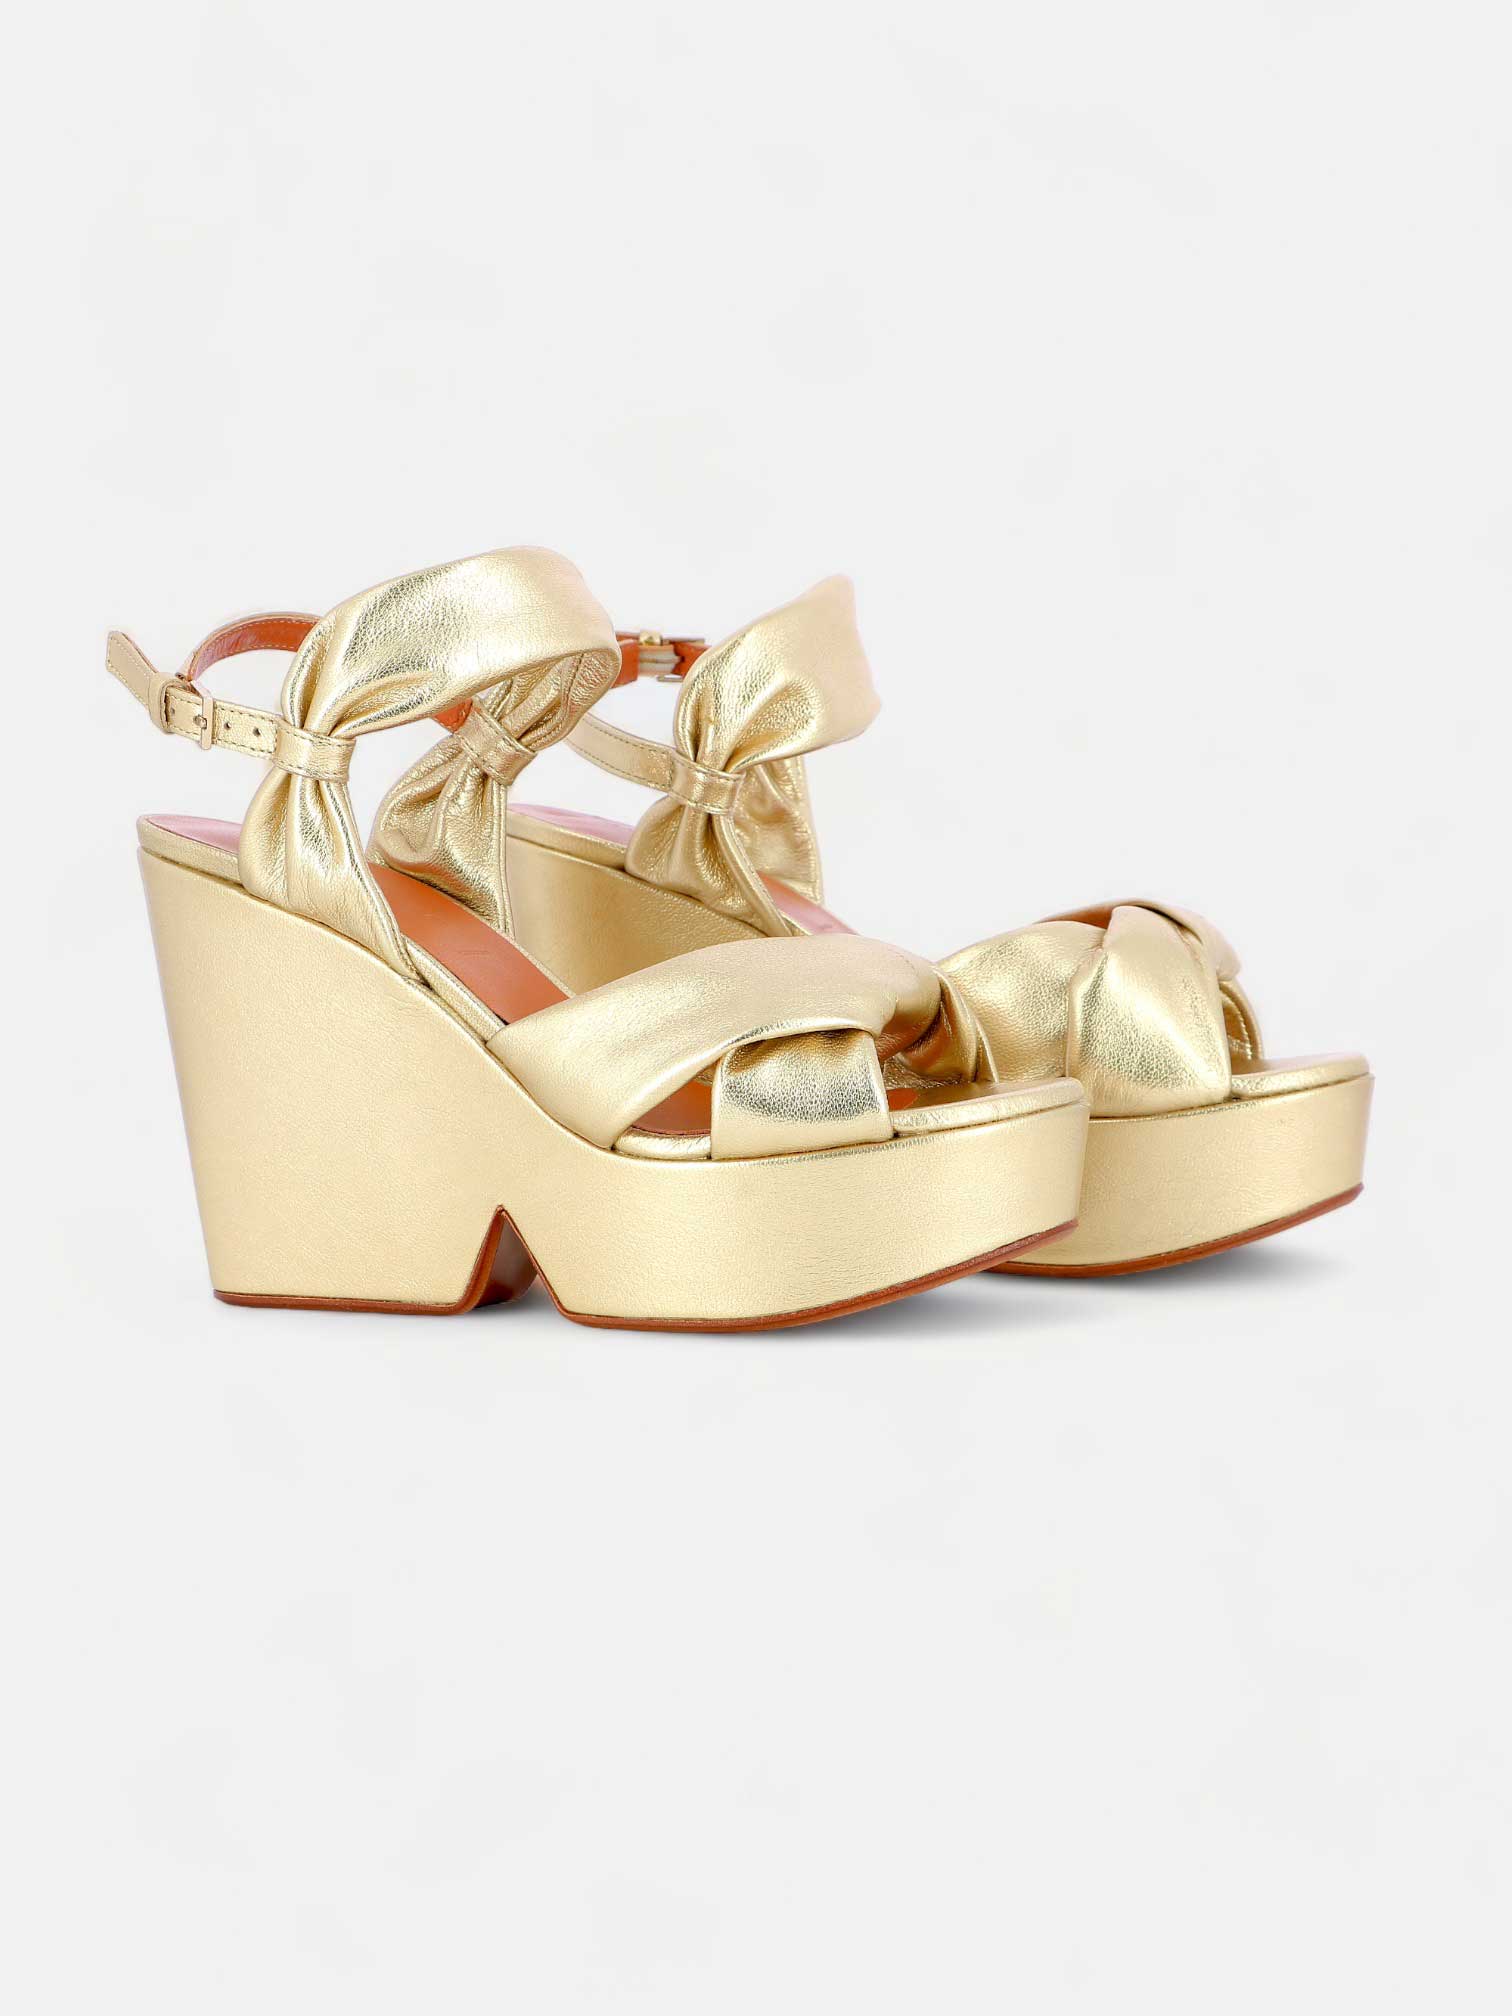 SANDALS - DARLIE sandals, lambskin gold metallic - DARLIEBEIMETM350 - Clergerie Paris - USA